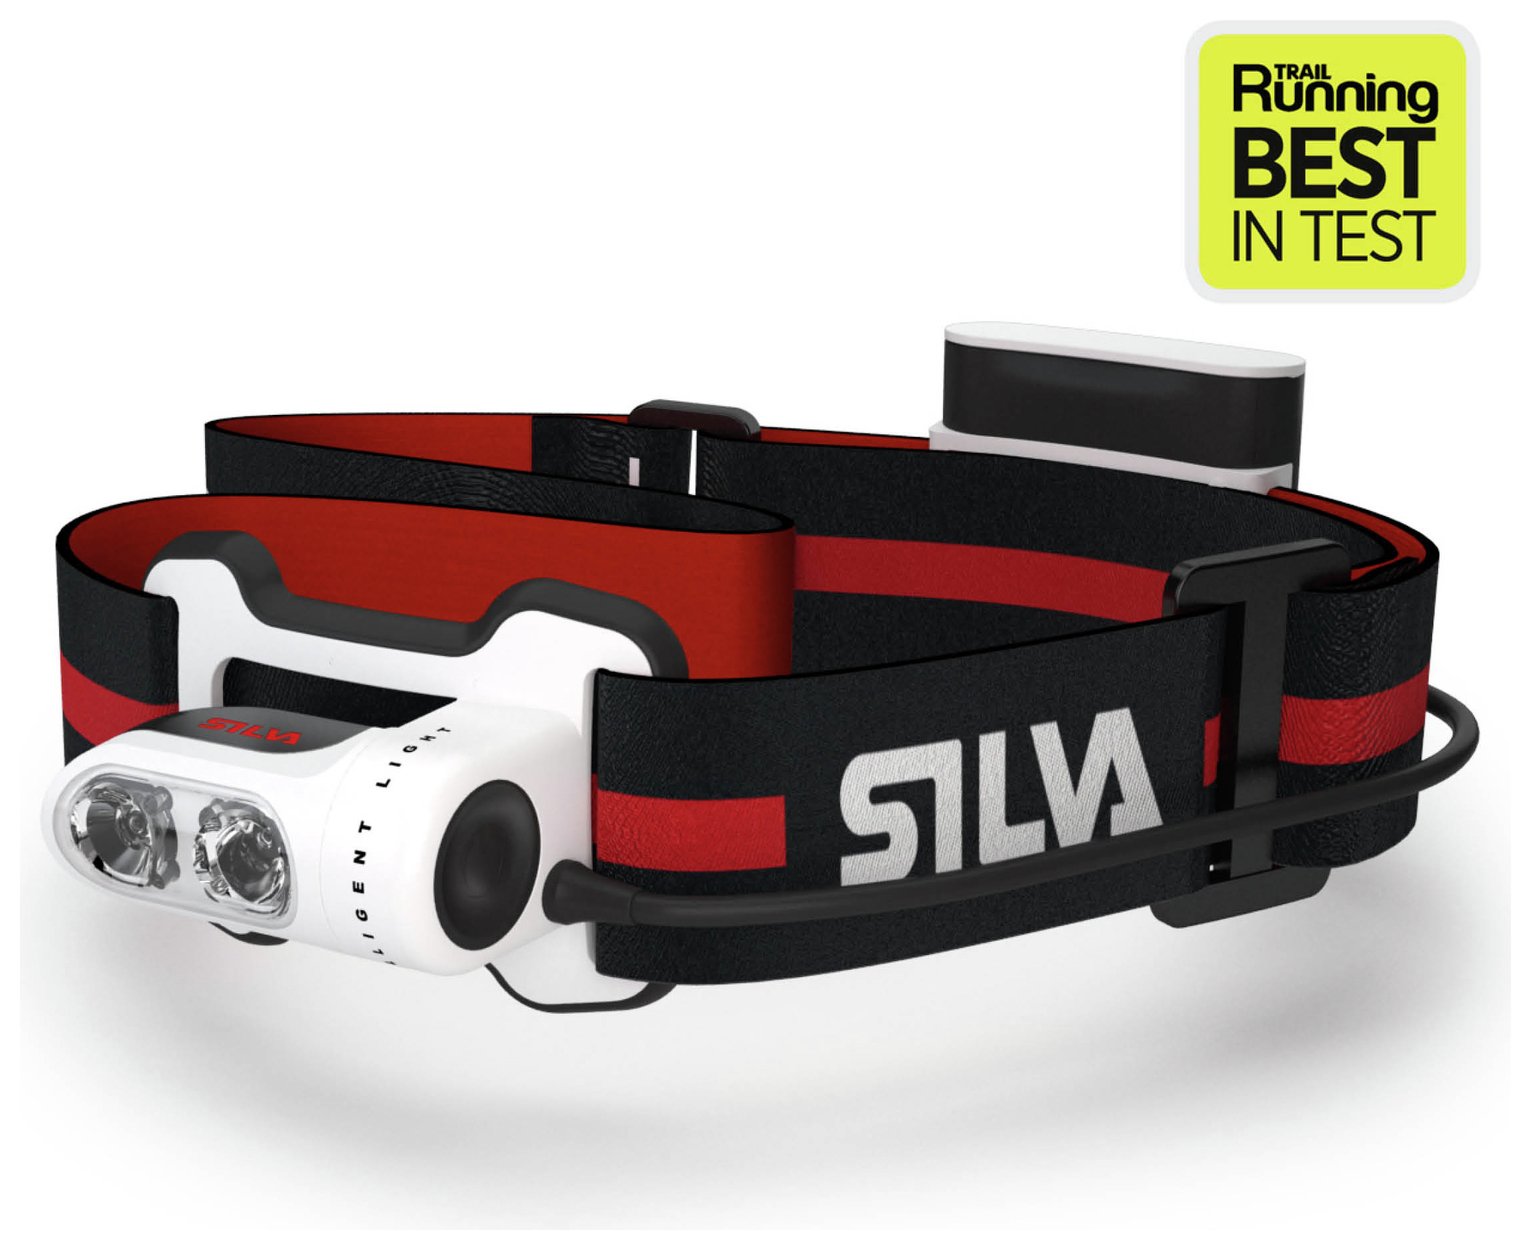 SILVA Trailer Runner 2 USB Head Lamp.